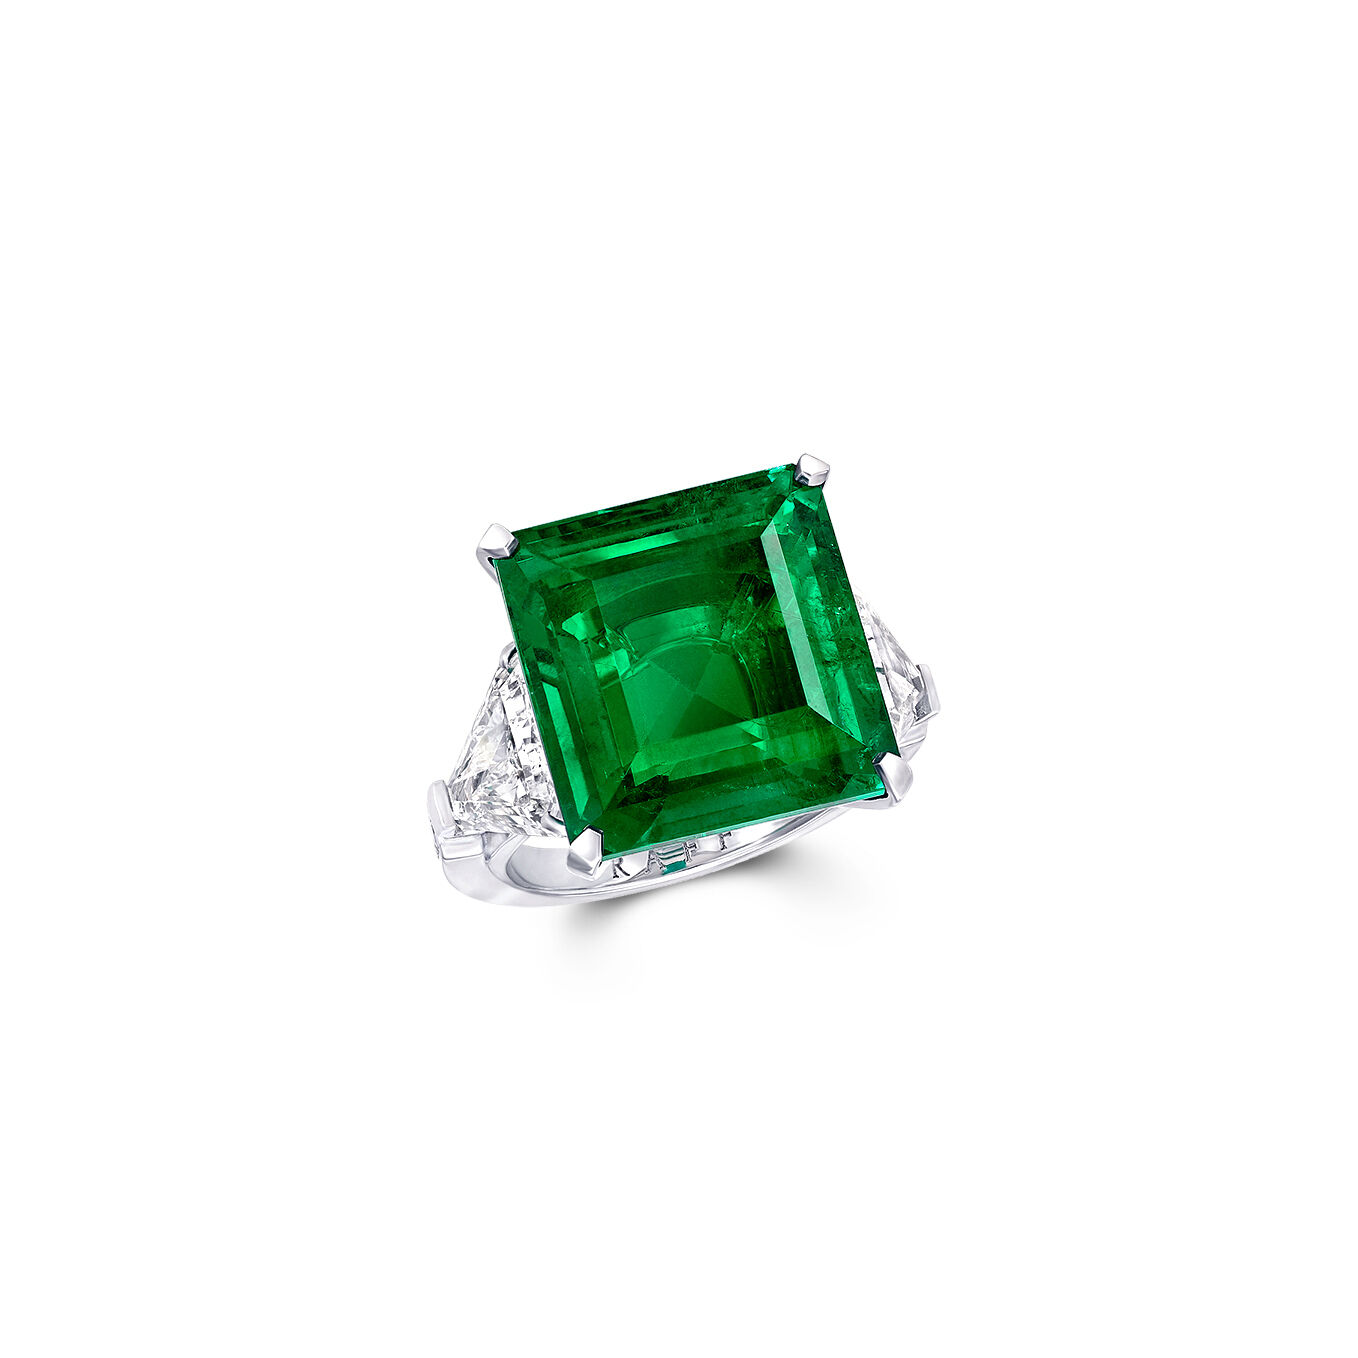 A Graff emerald cut emerald and white diamond high jewellery ring